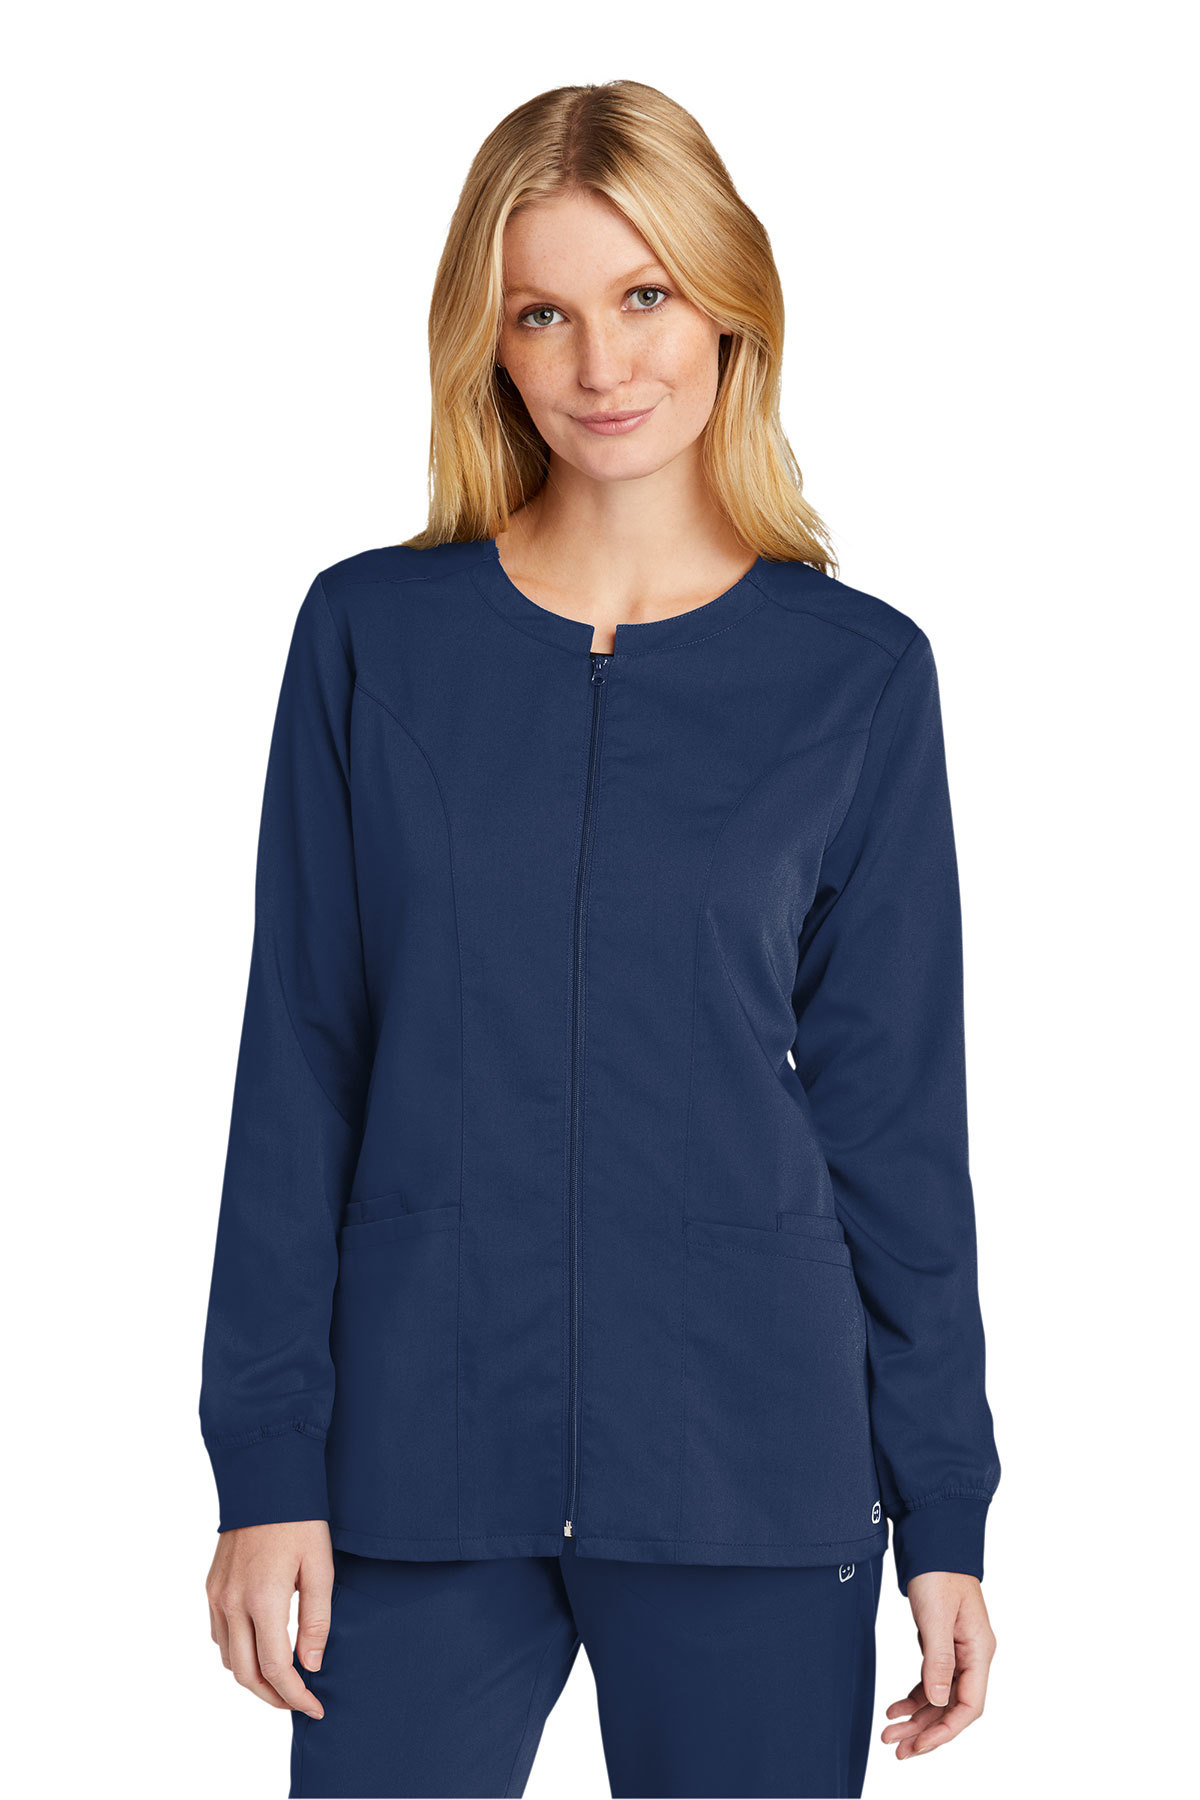 Womens Fleece Full Zip Jacket – Wink Scrubs